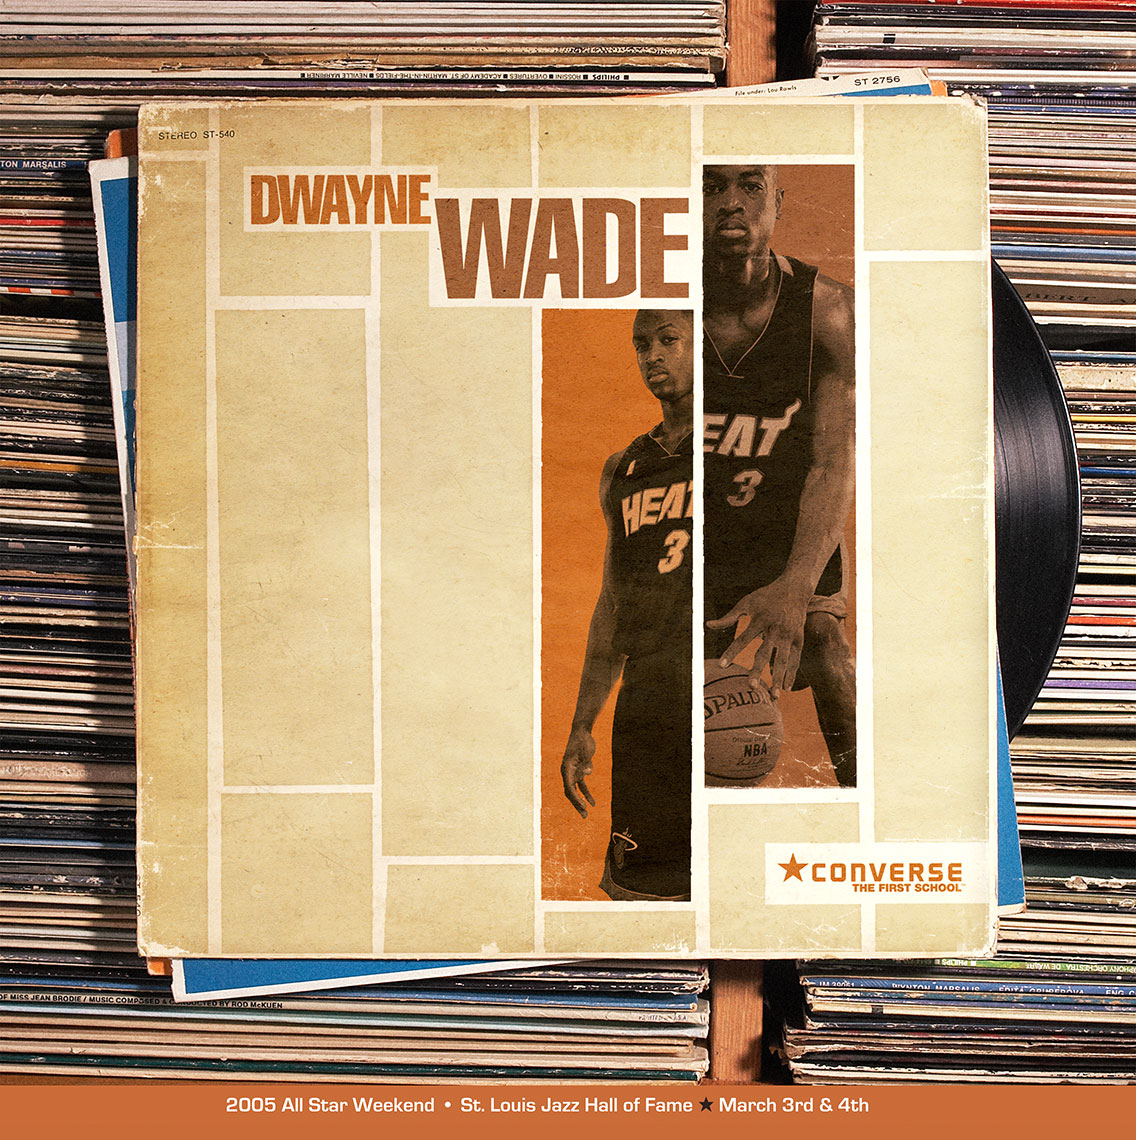 Converse - Dwayne Wade